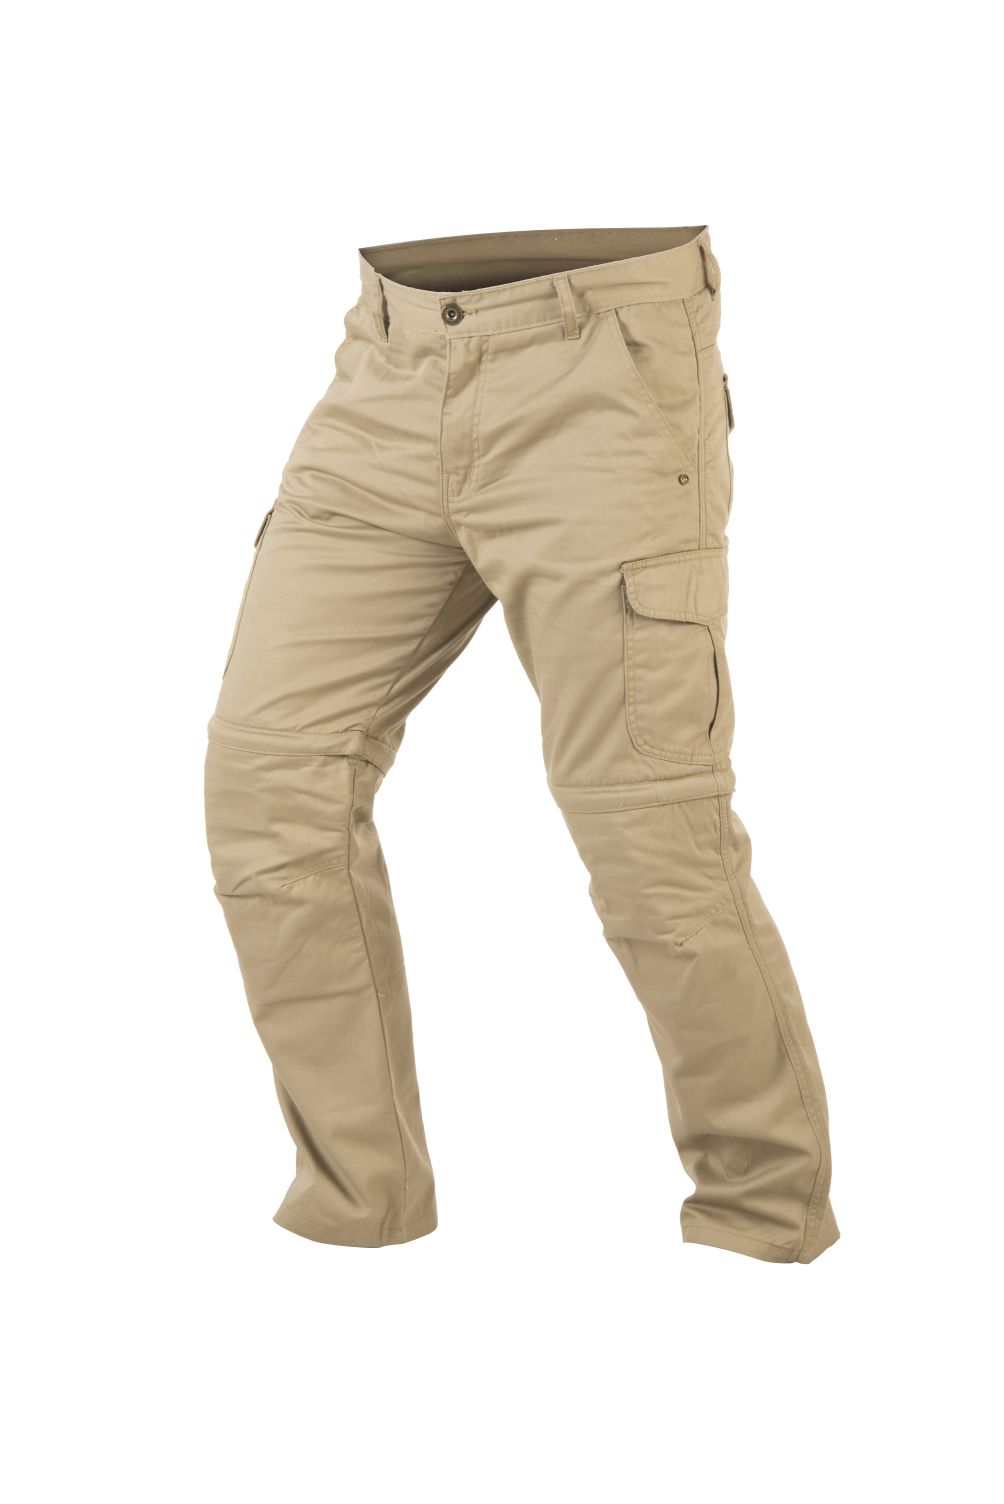 Dual Pants (2in1) - T1864BEIGE - 34